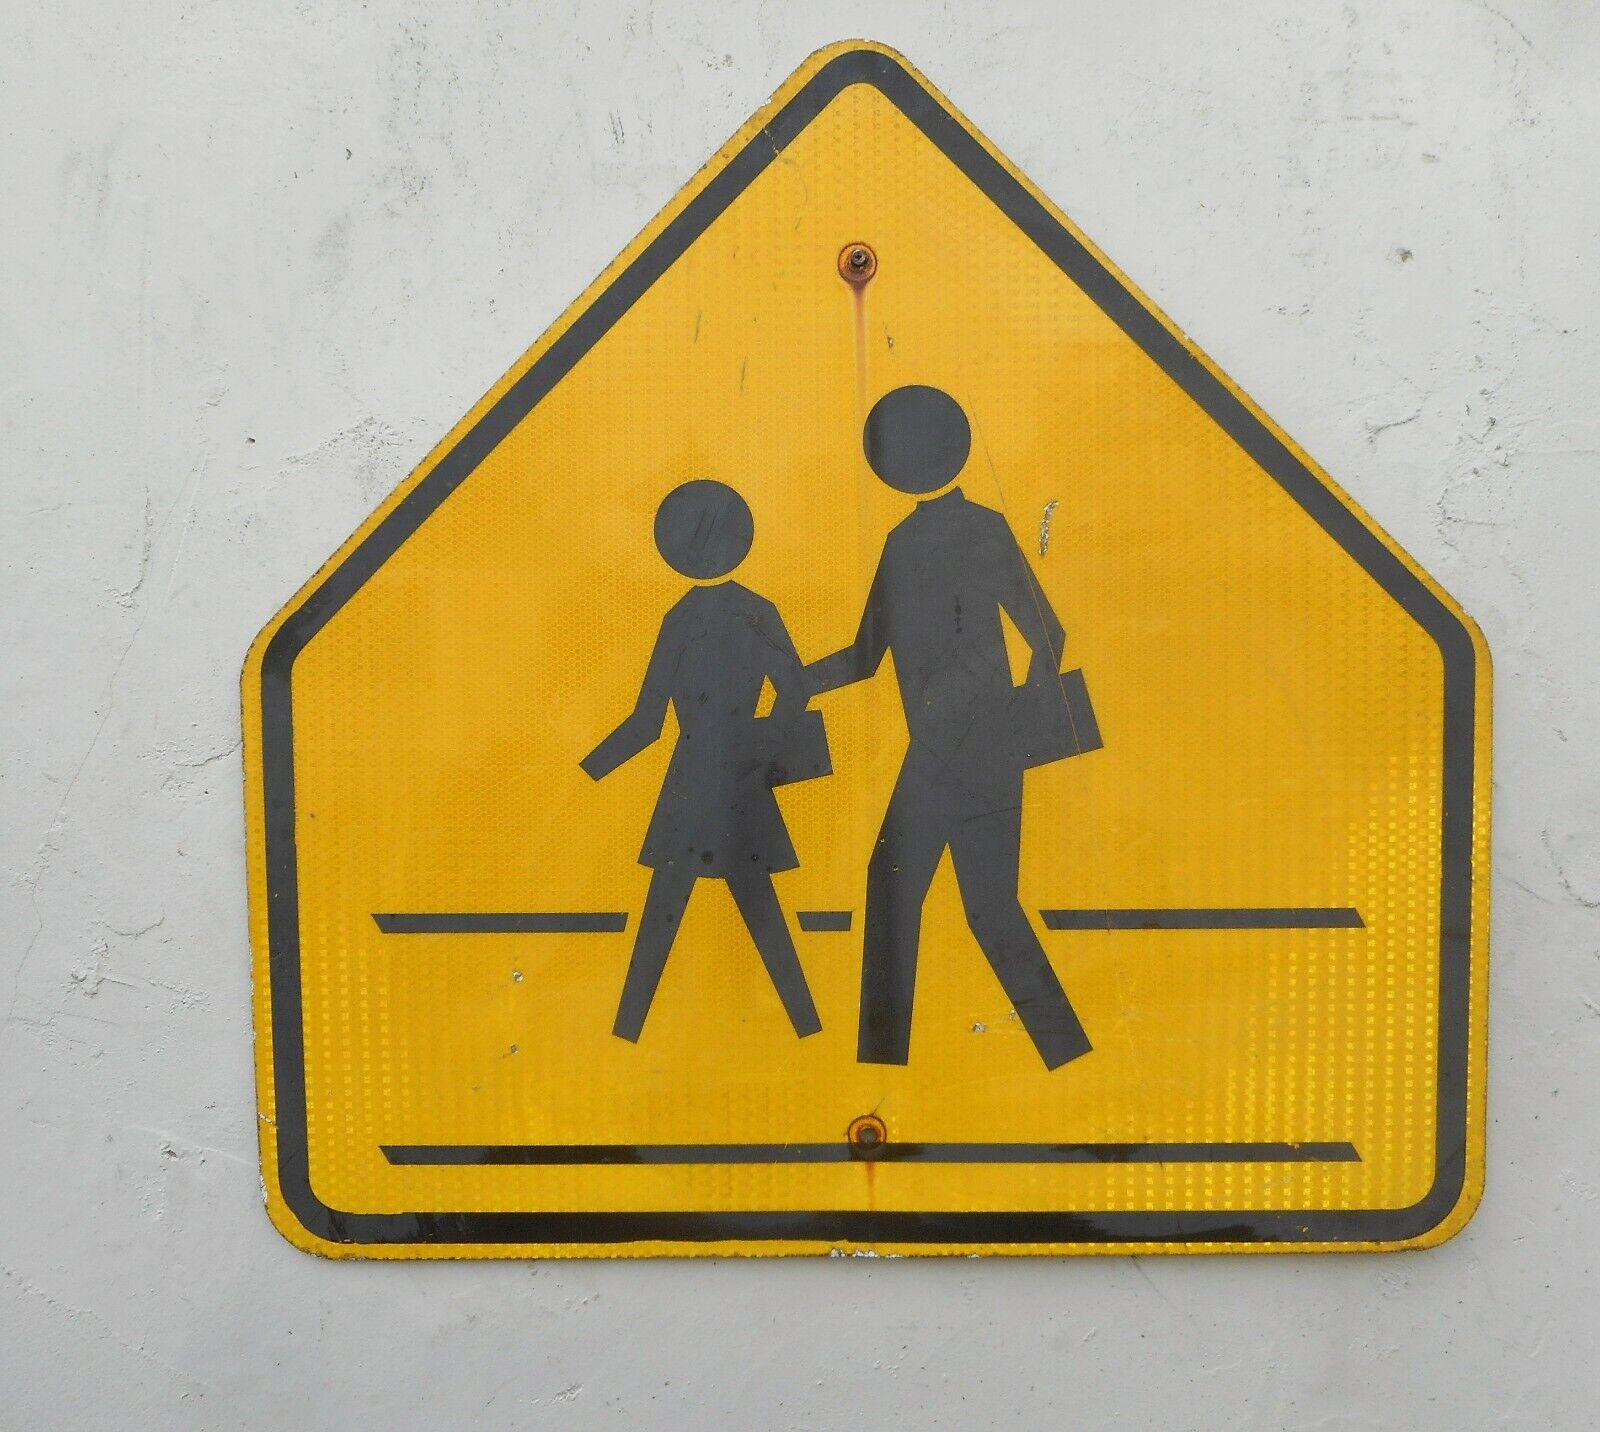 Authentic Vintage Metal Retired Yellow School Crossing Pedestrian  Street sign